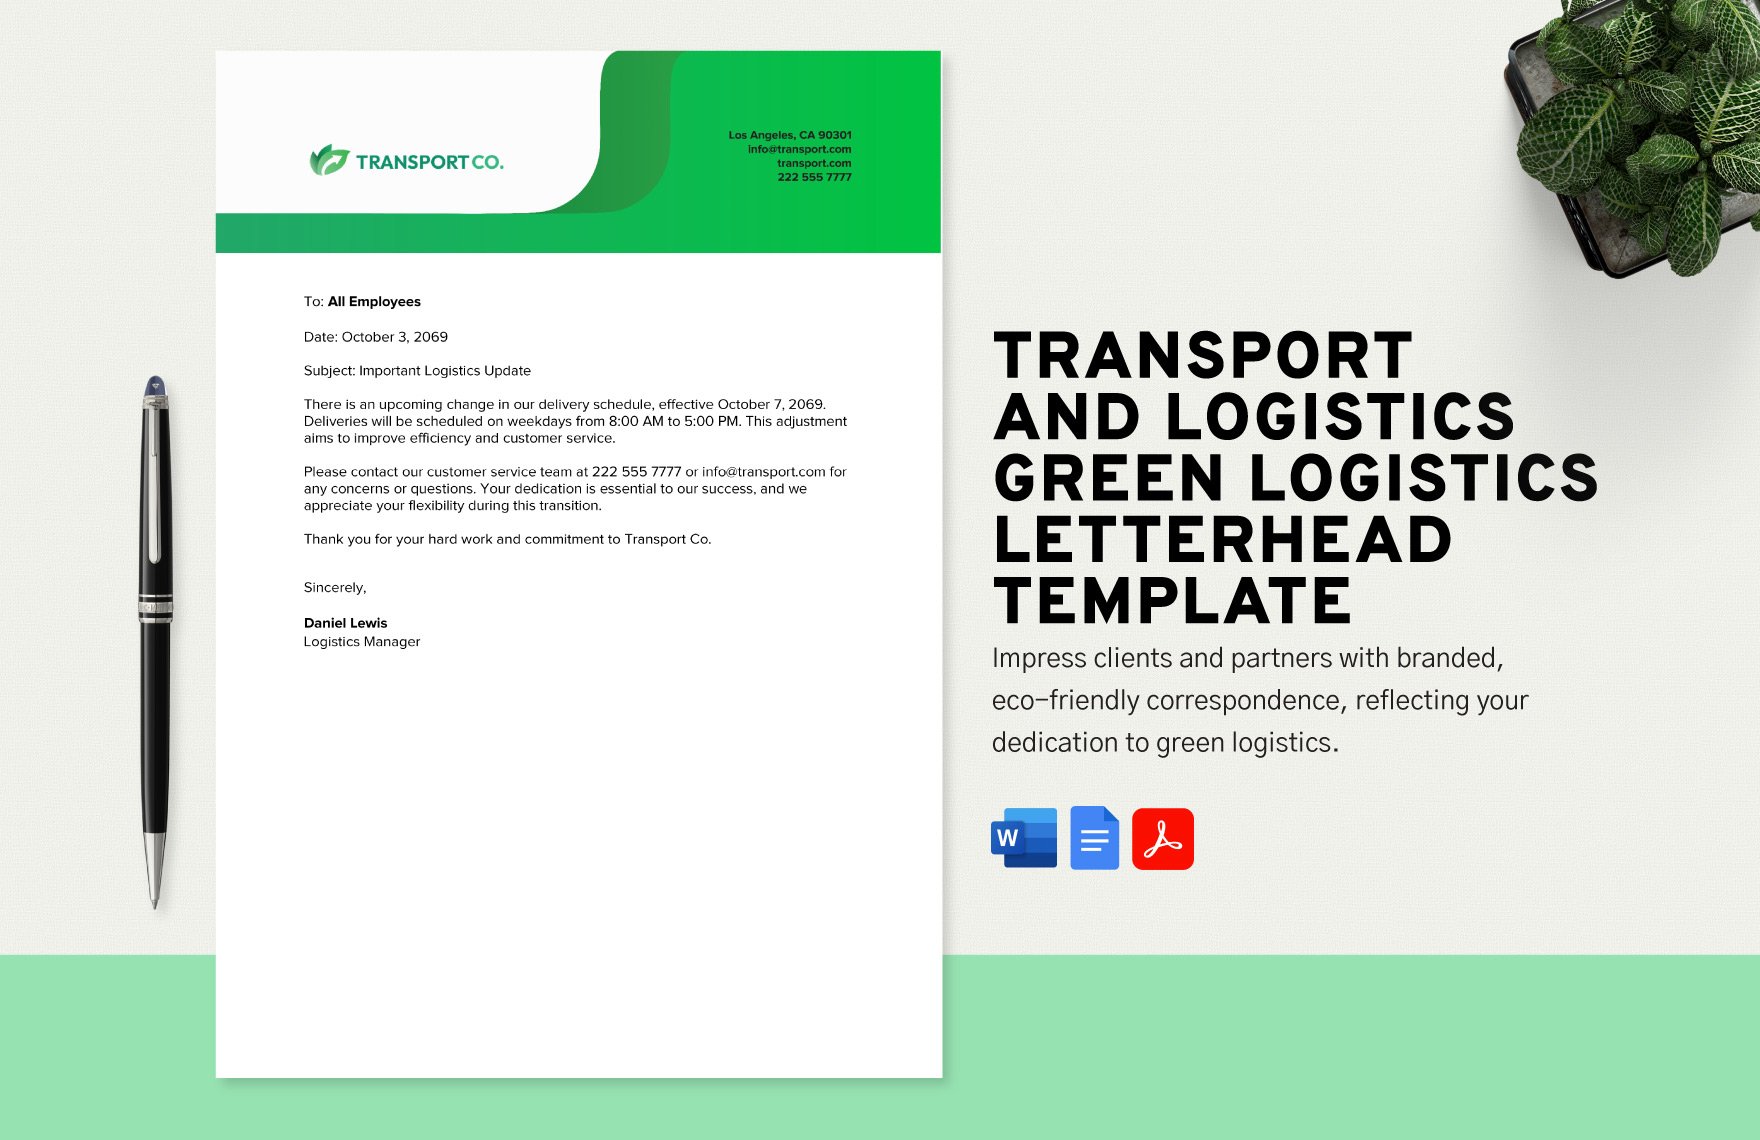 Transport and Logistics Green Logistics Letterhead Template